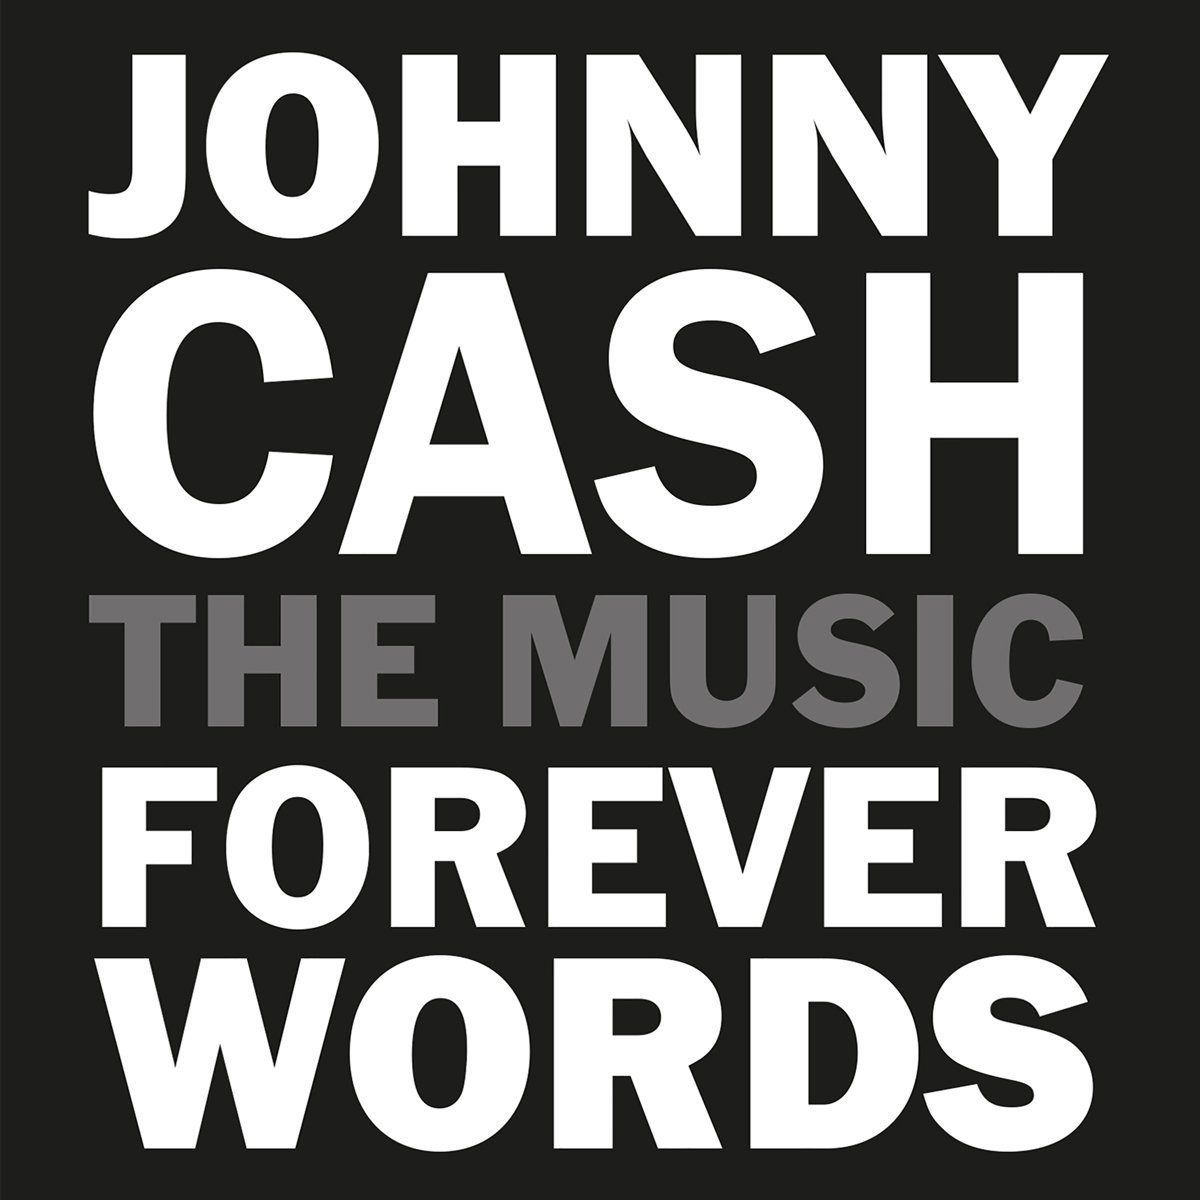 Johnny Cash: Forever Words 조니 캐쉬의 미발표 시집을 노래한 앨범 [2 LP]